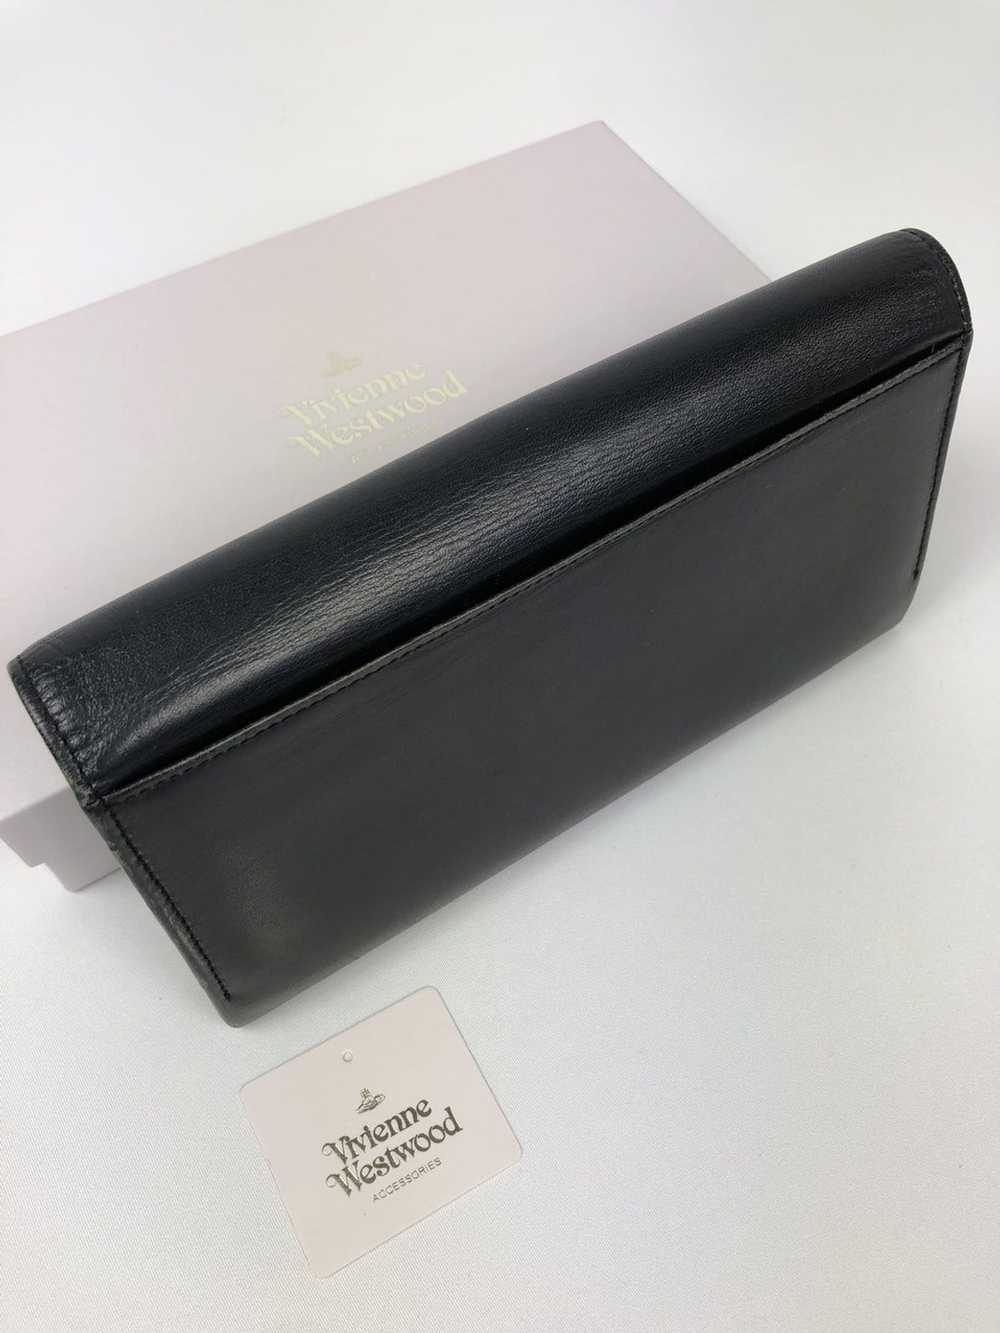 Vivienne Westwood Orb leather long wallet - image 2